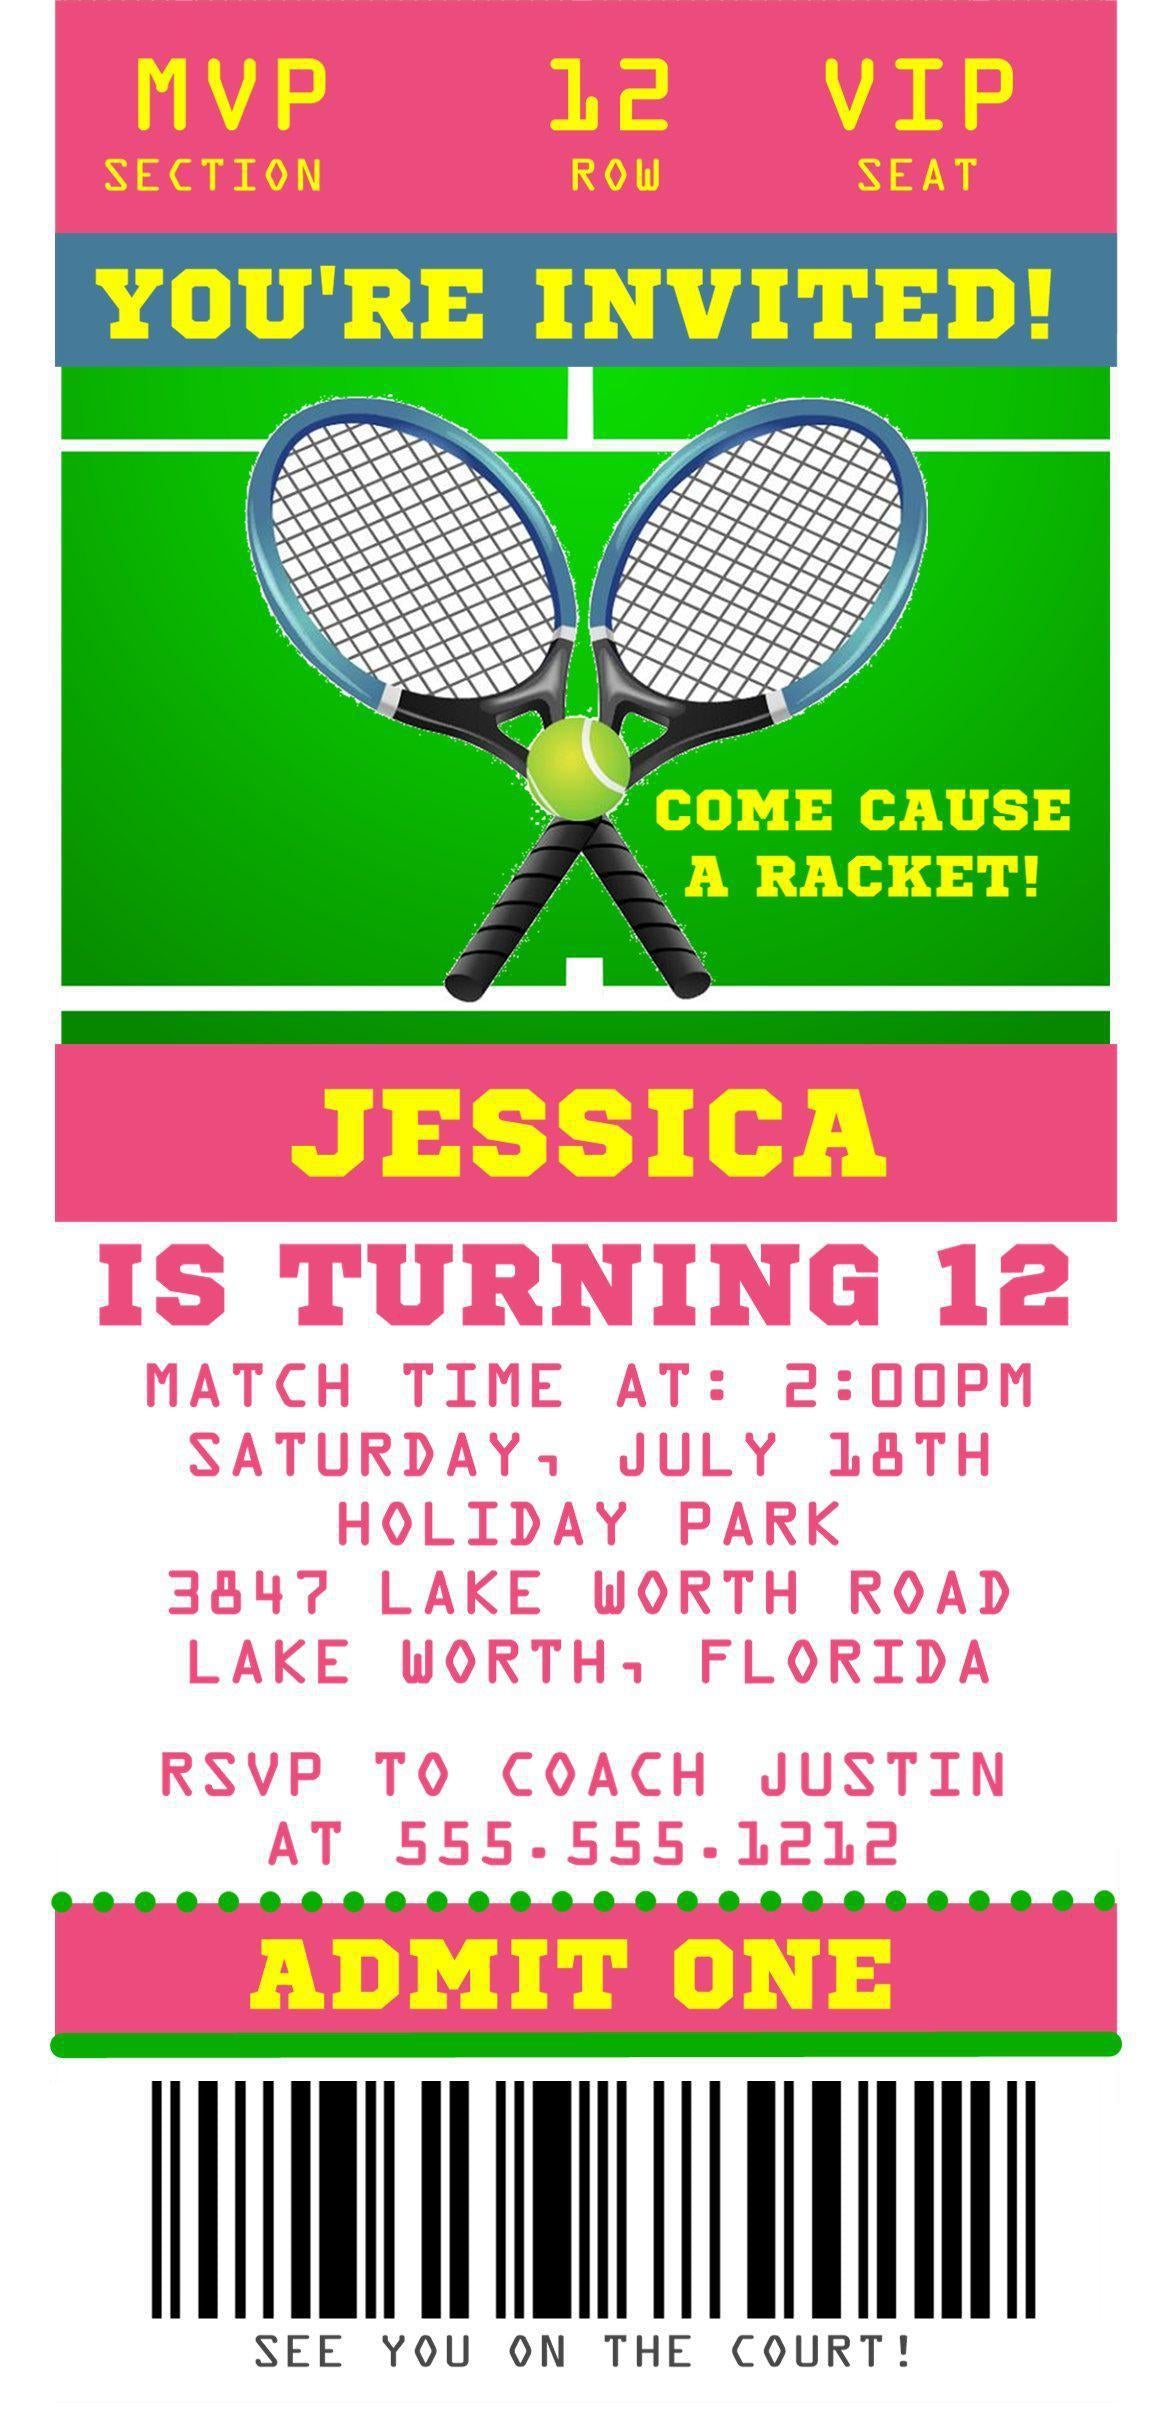 Tennis Birthday Party Ticket Invitations